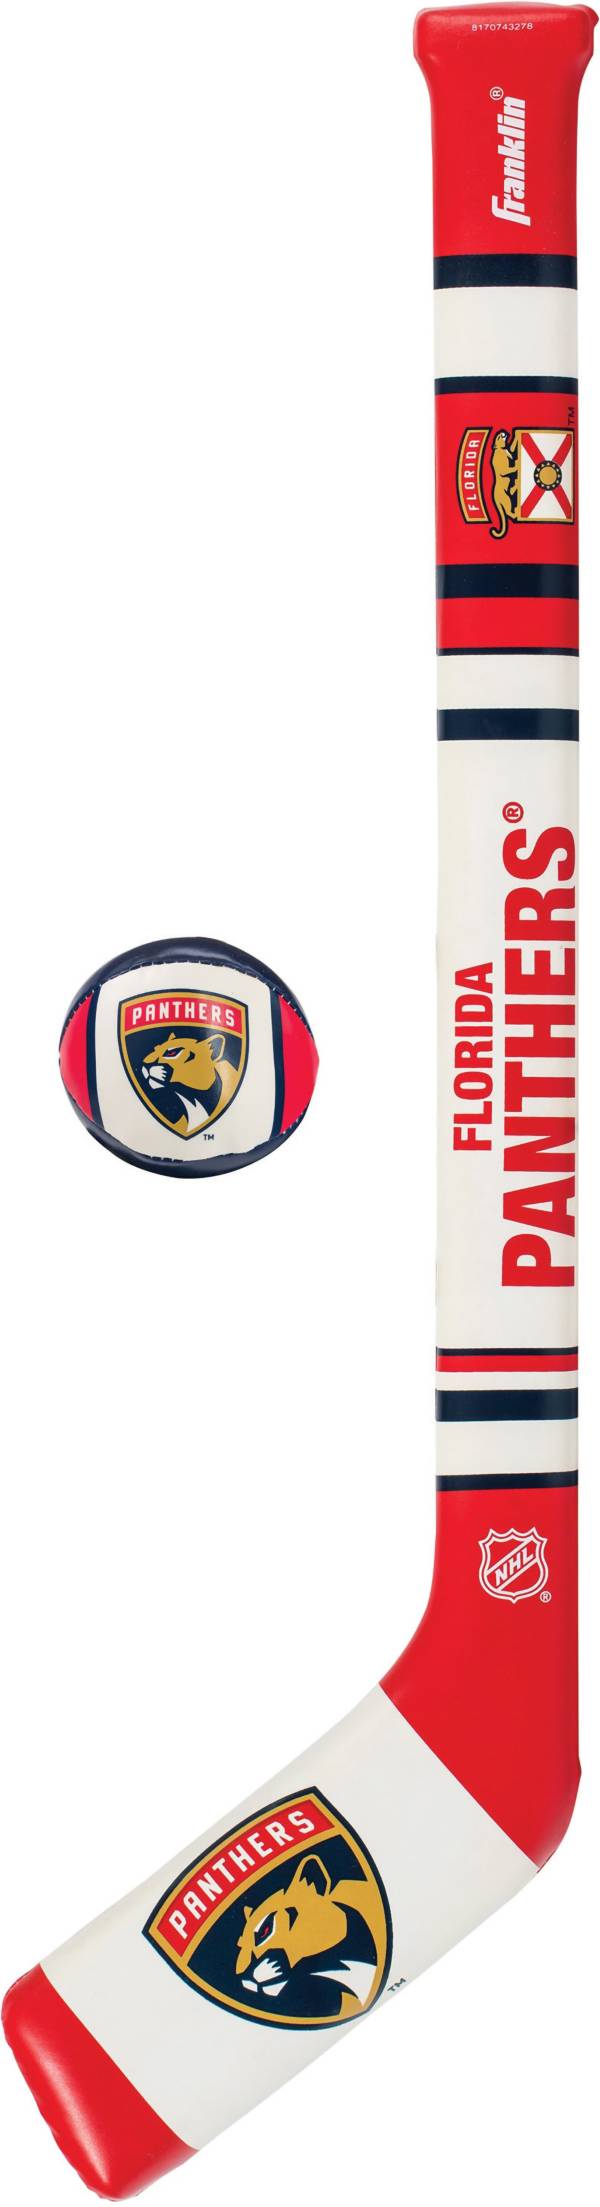 Franklin Florida Panthers Mini Hockey Set product image